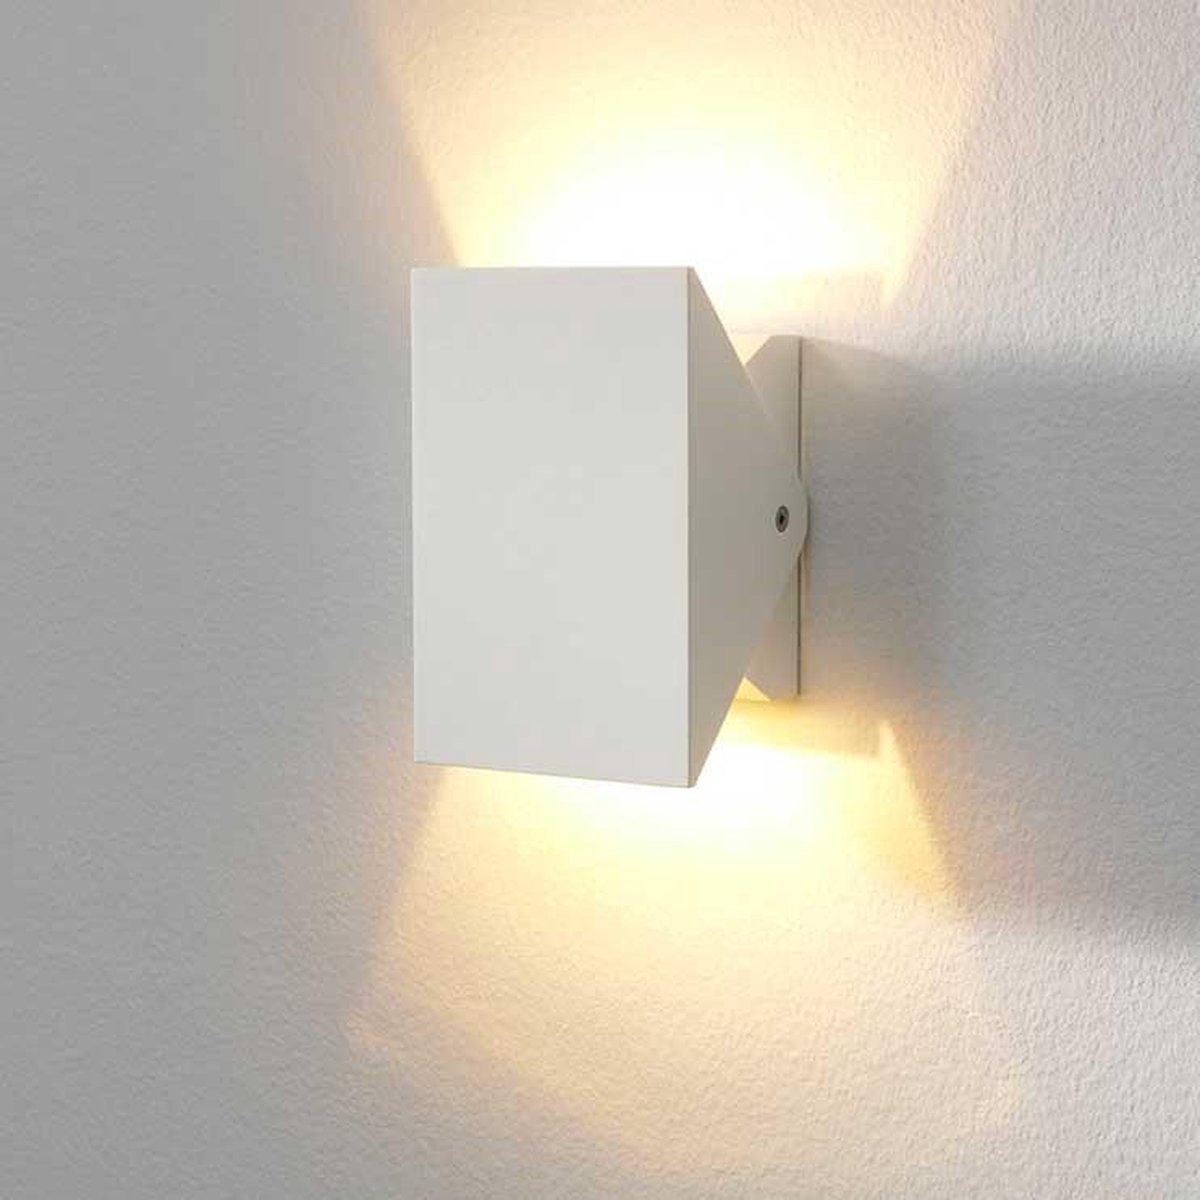 Wandlamp Toledo Wit - LED 7W 2700K 810lm - IP65 - Dimbaar > wandlamp binnen wit | wandlamp buiten wit | wandlamp wit | buitenlamp wit | muurlamp wit | led lamp wit | sfeer lamp wit | design lamp wit